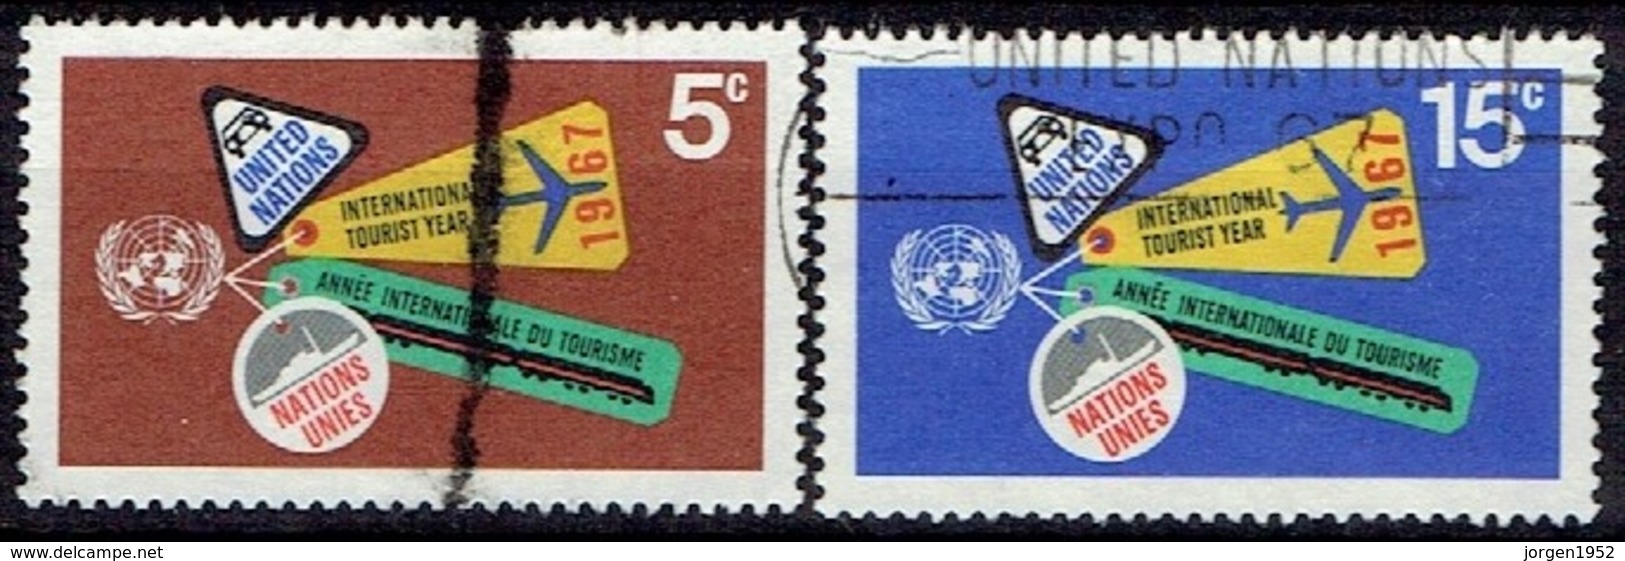 UNITED NATIONS # NEW YORK FROM 1967 STAMPWORLD 185-86 - Gebruikt